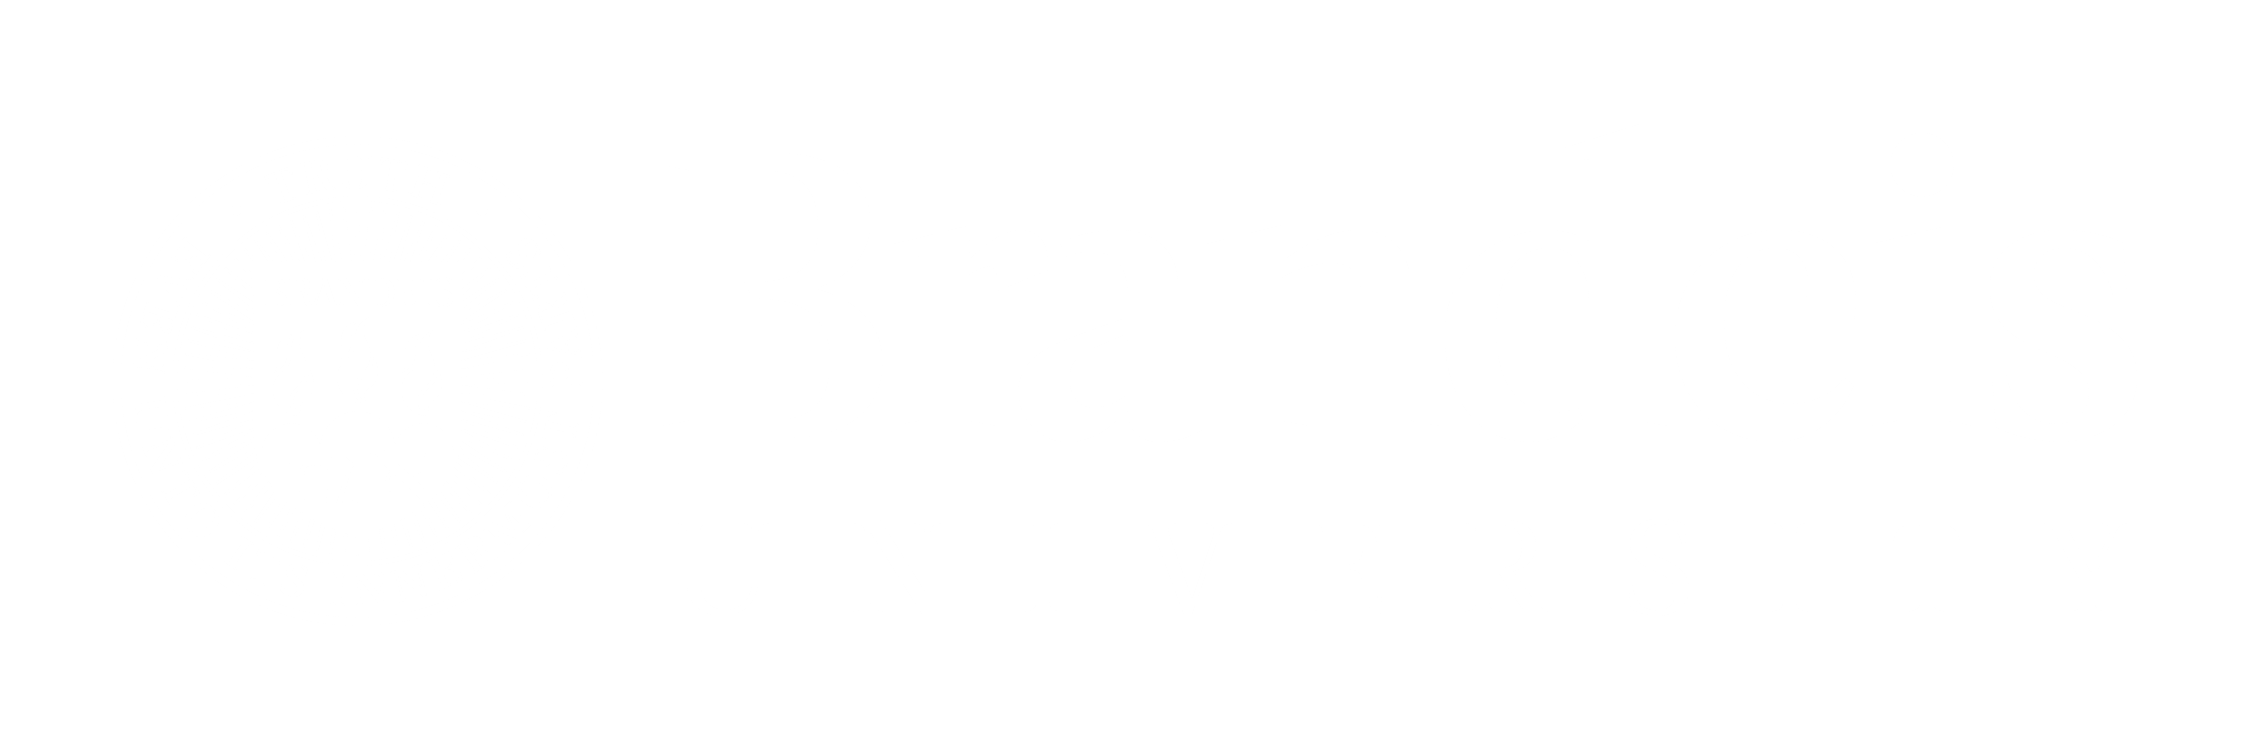 Brandeis University Logo Image.